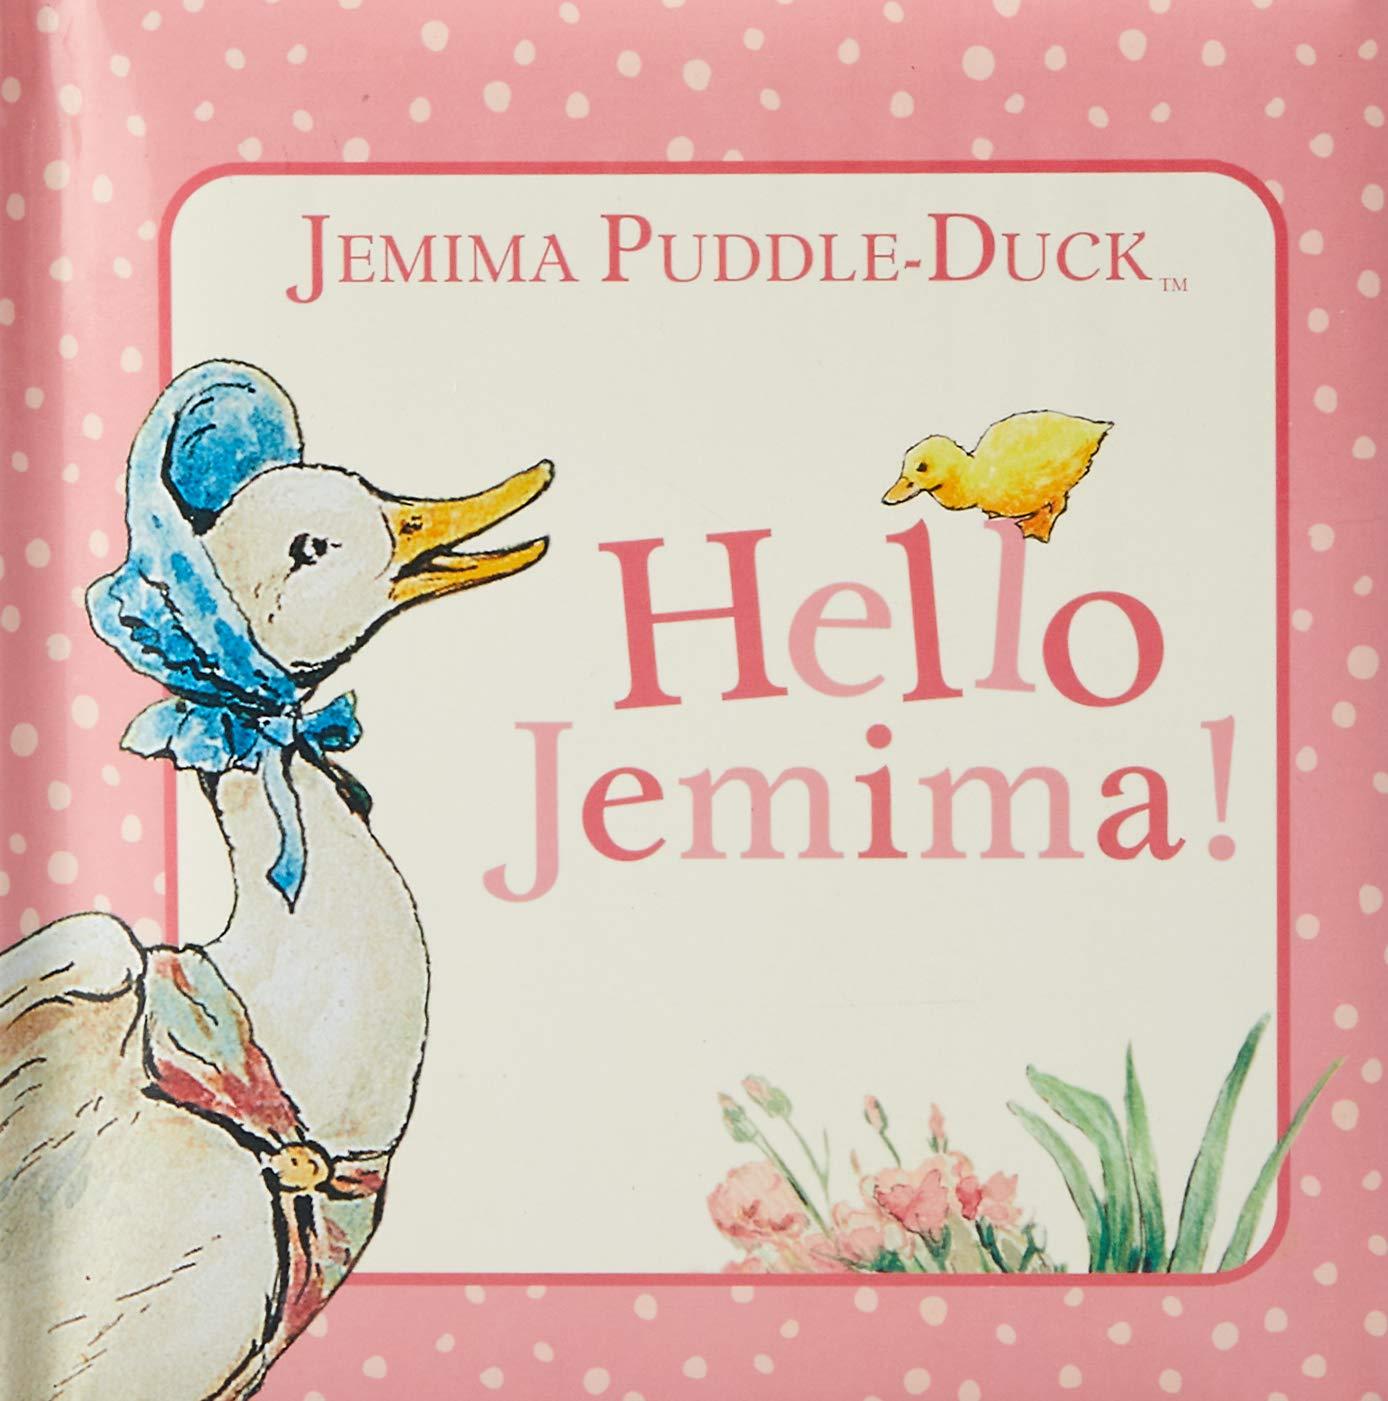 Jemima Puddle-Duck: Hello Jemima!